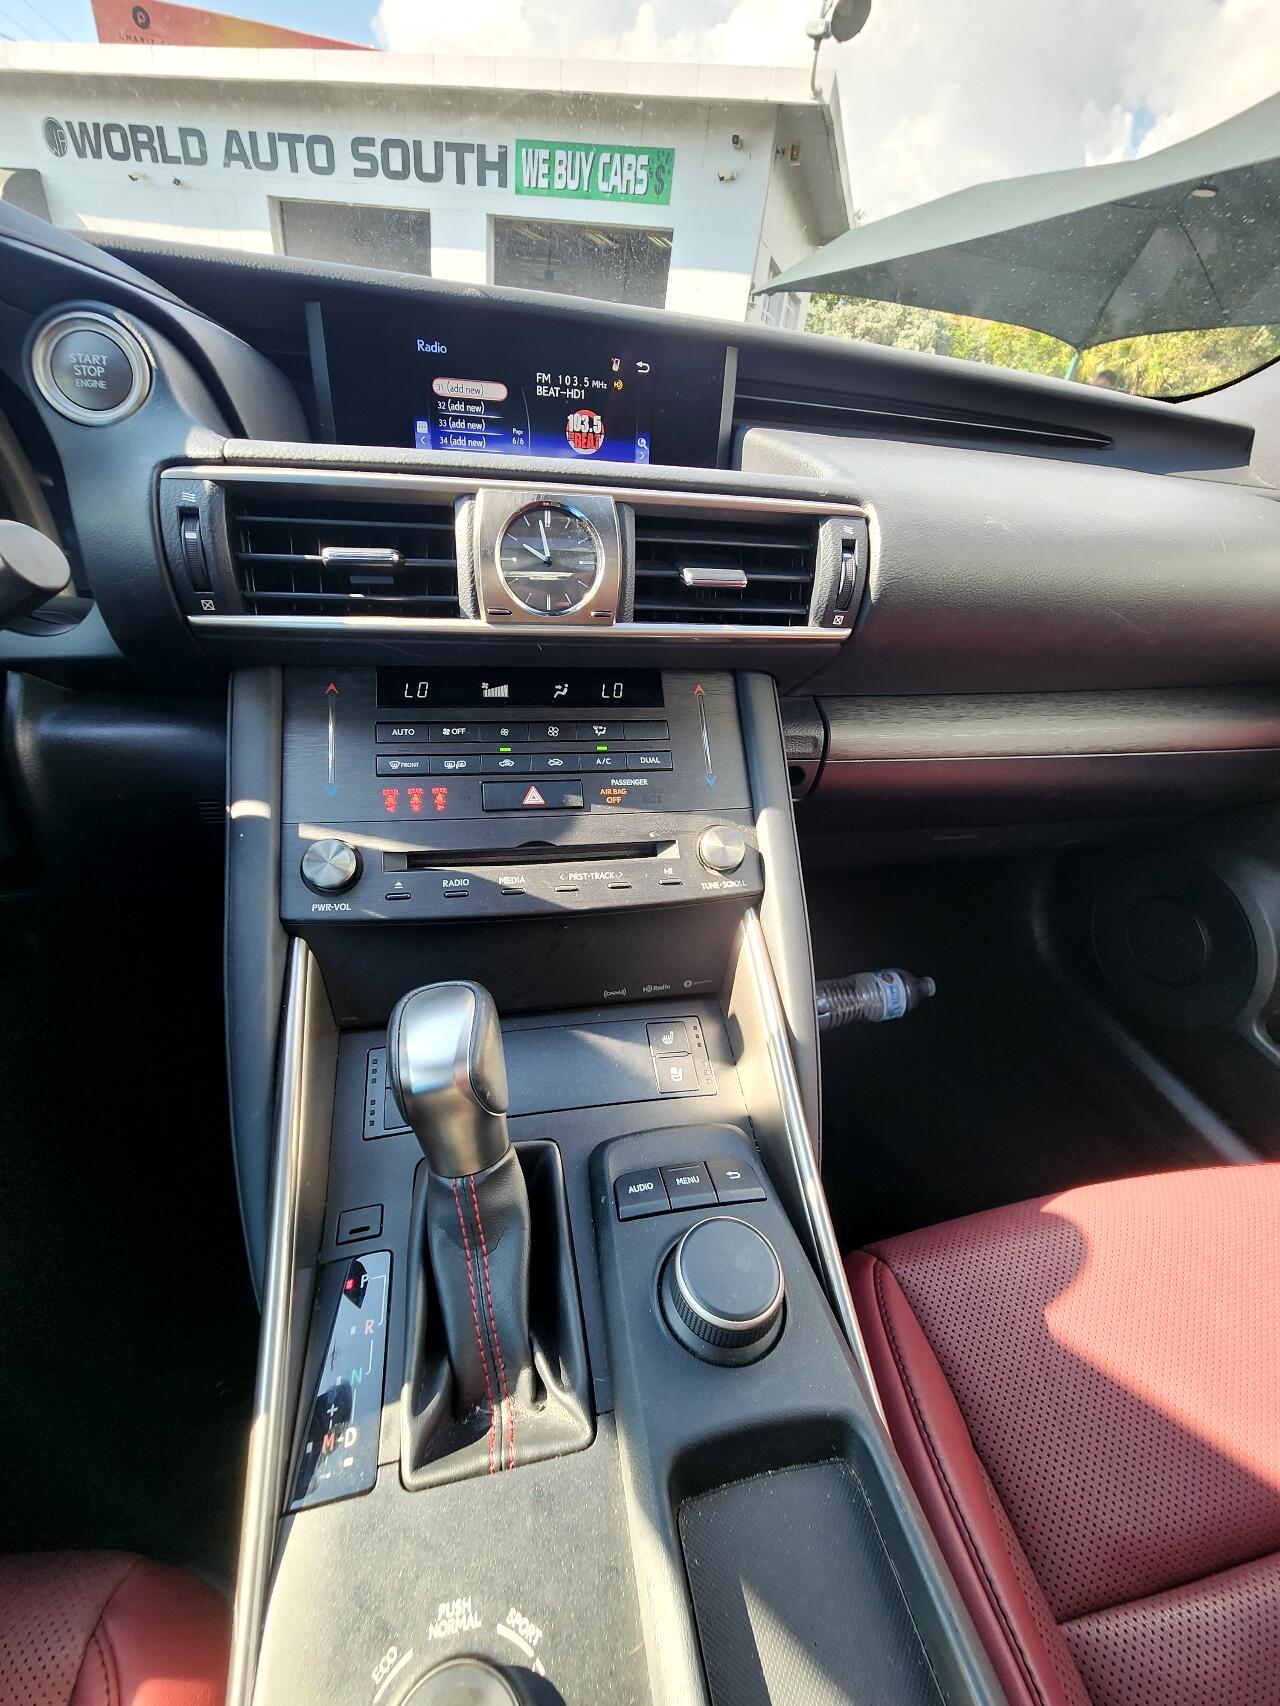 2020 LEXUS IS Sedan - $28,999